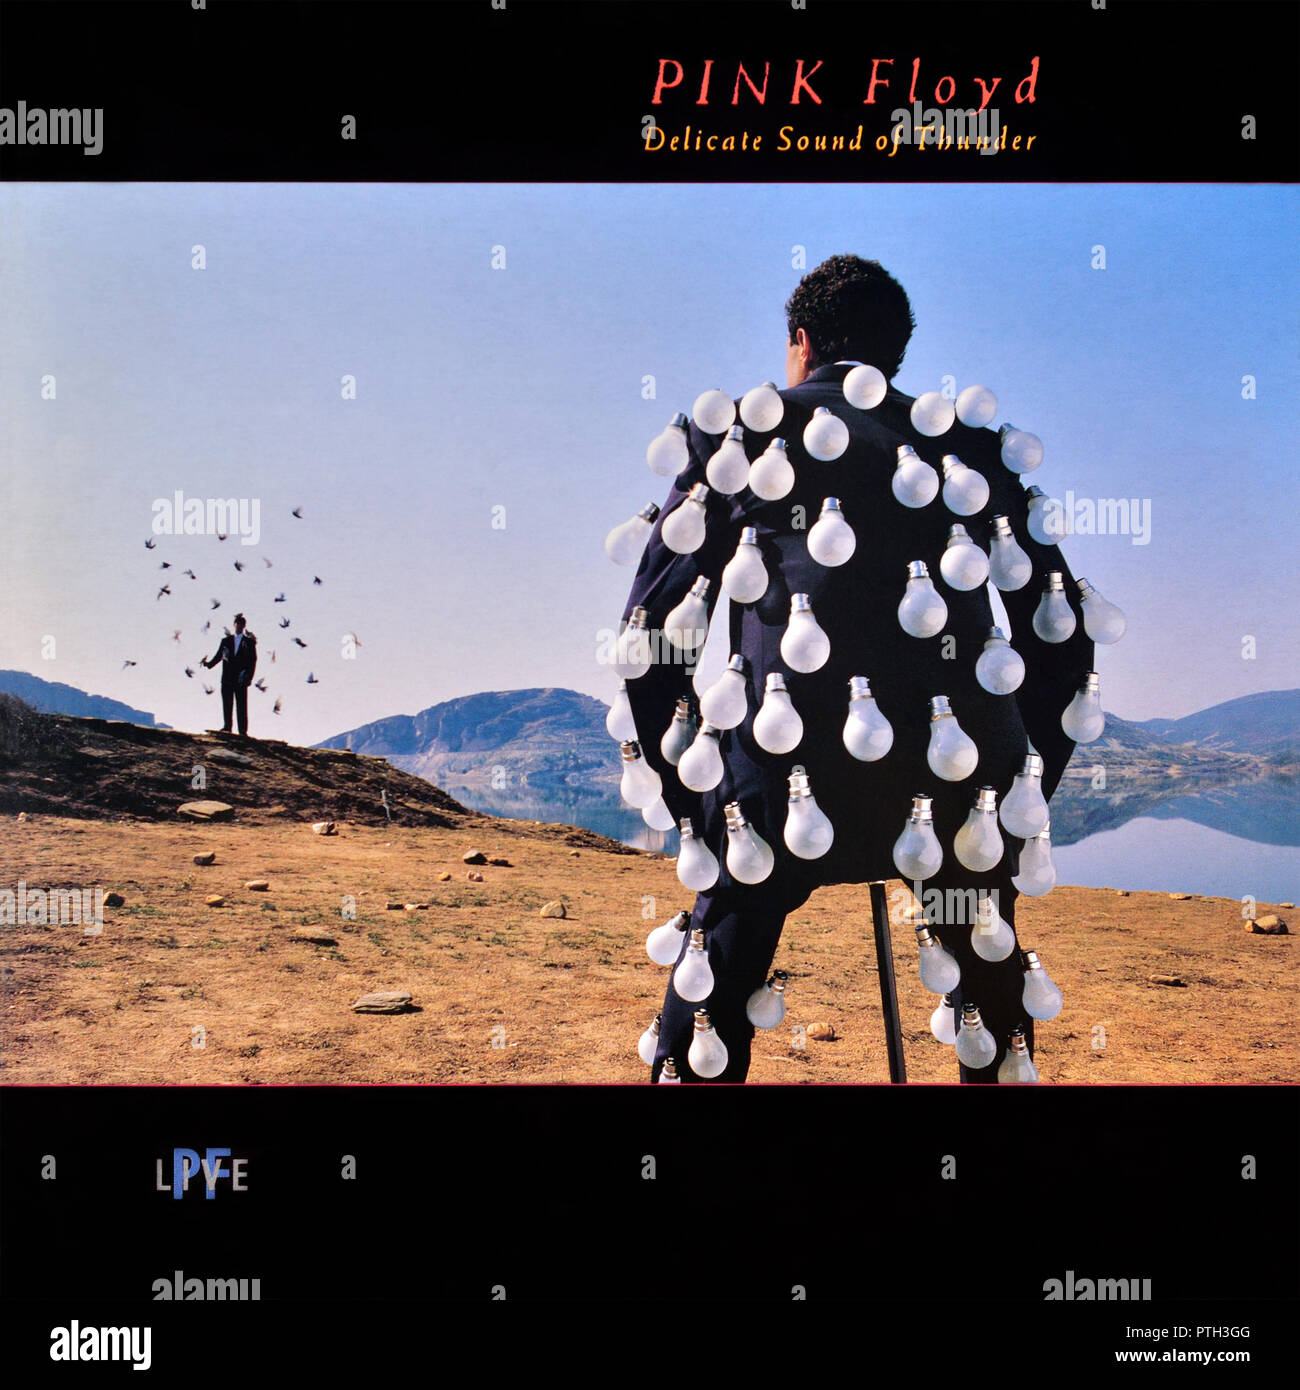 Pink Floyd - original Vinyl Album Cover - Delicate Sound of Thunder - 1988 Stockfoto